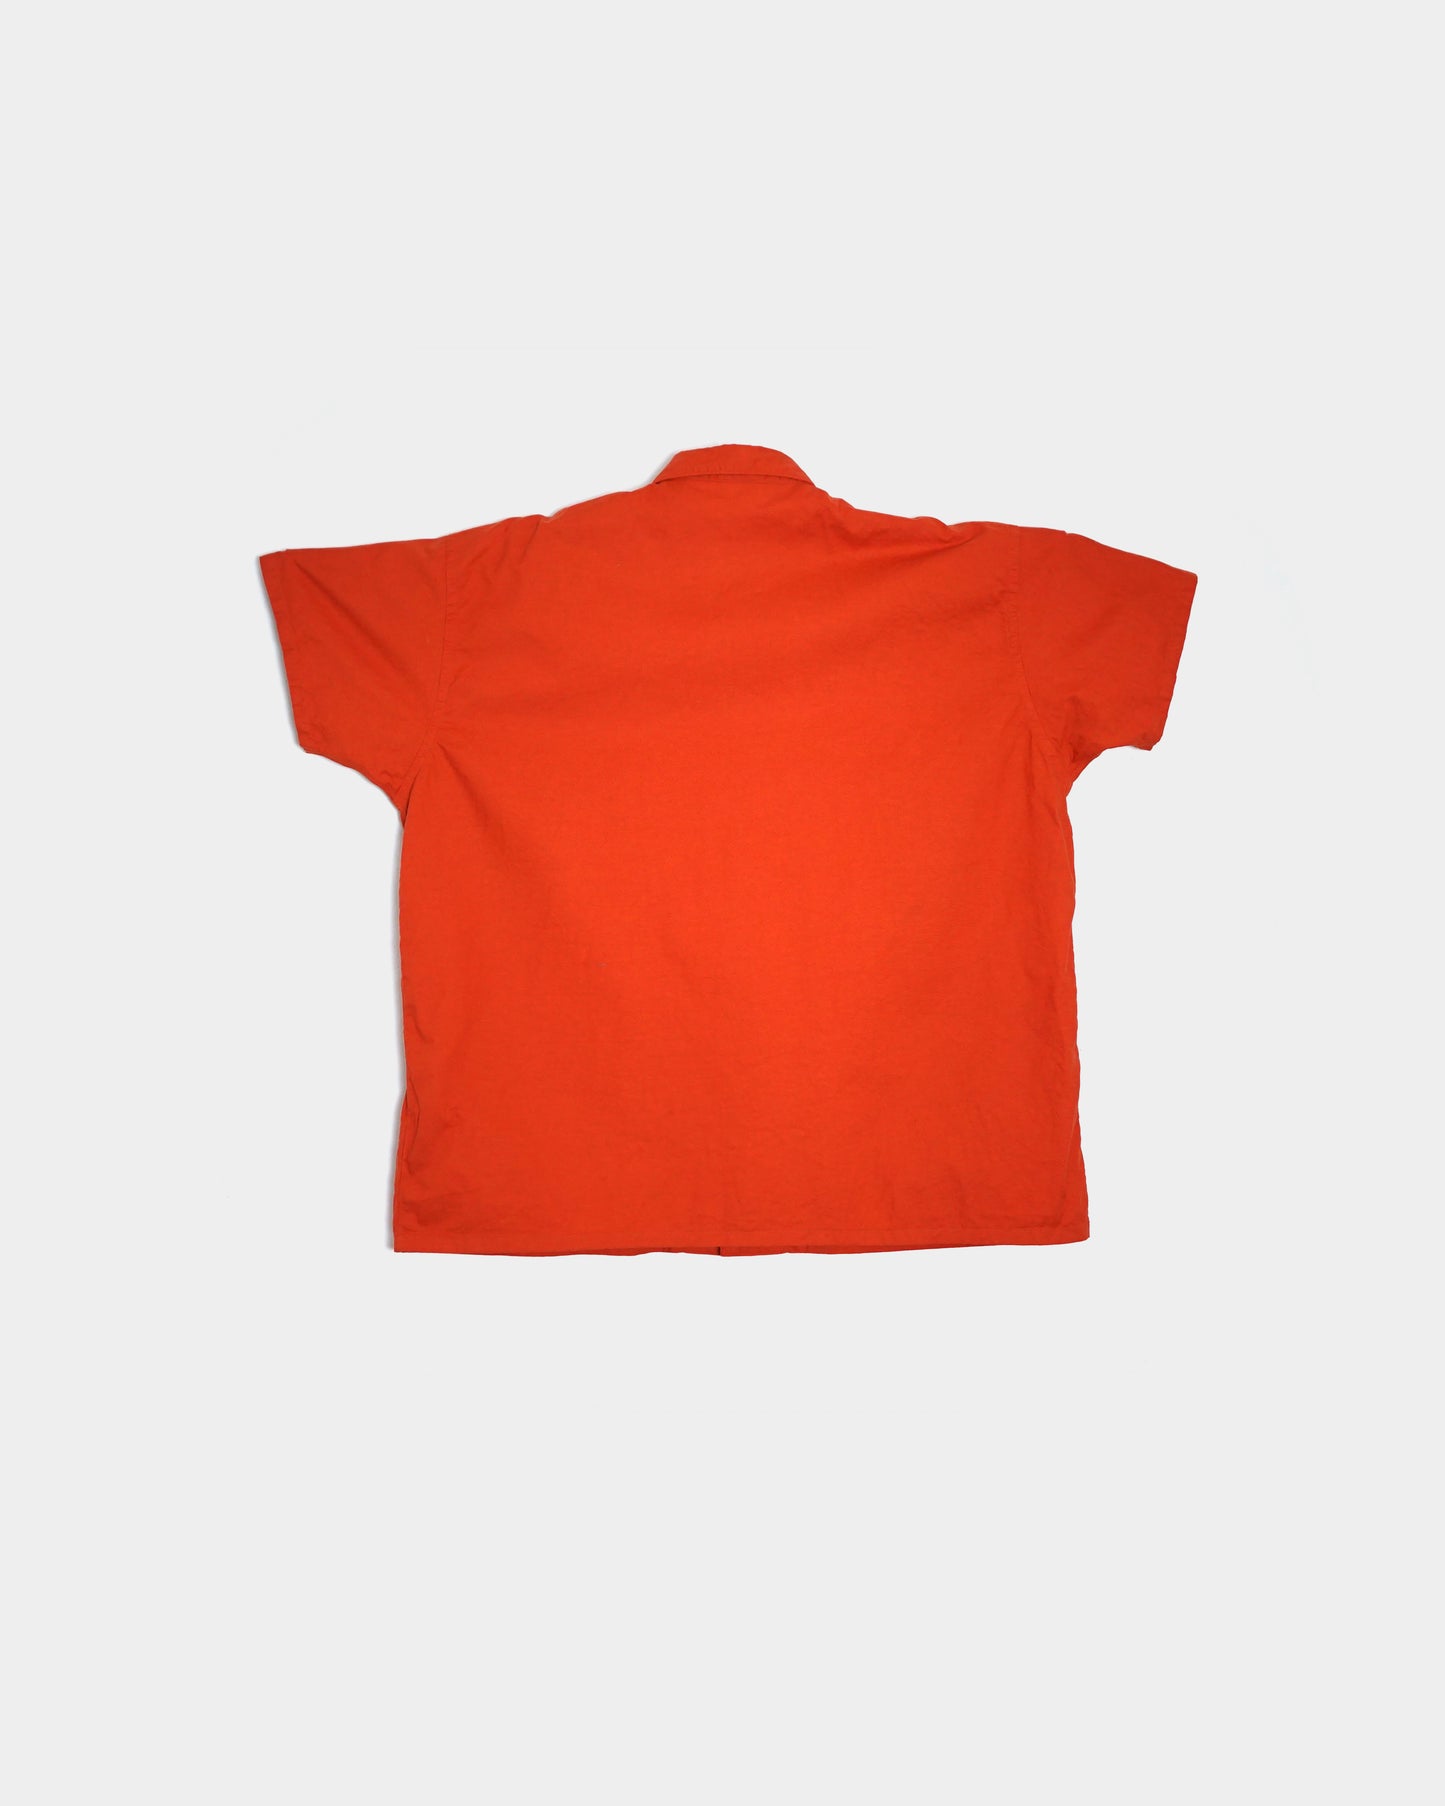 TUKI/blouse "Dull Orange"